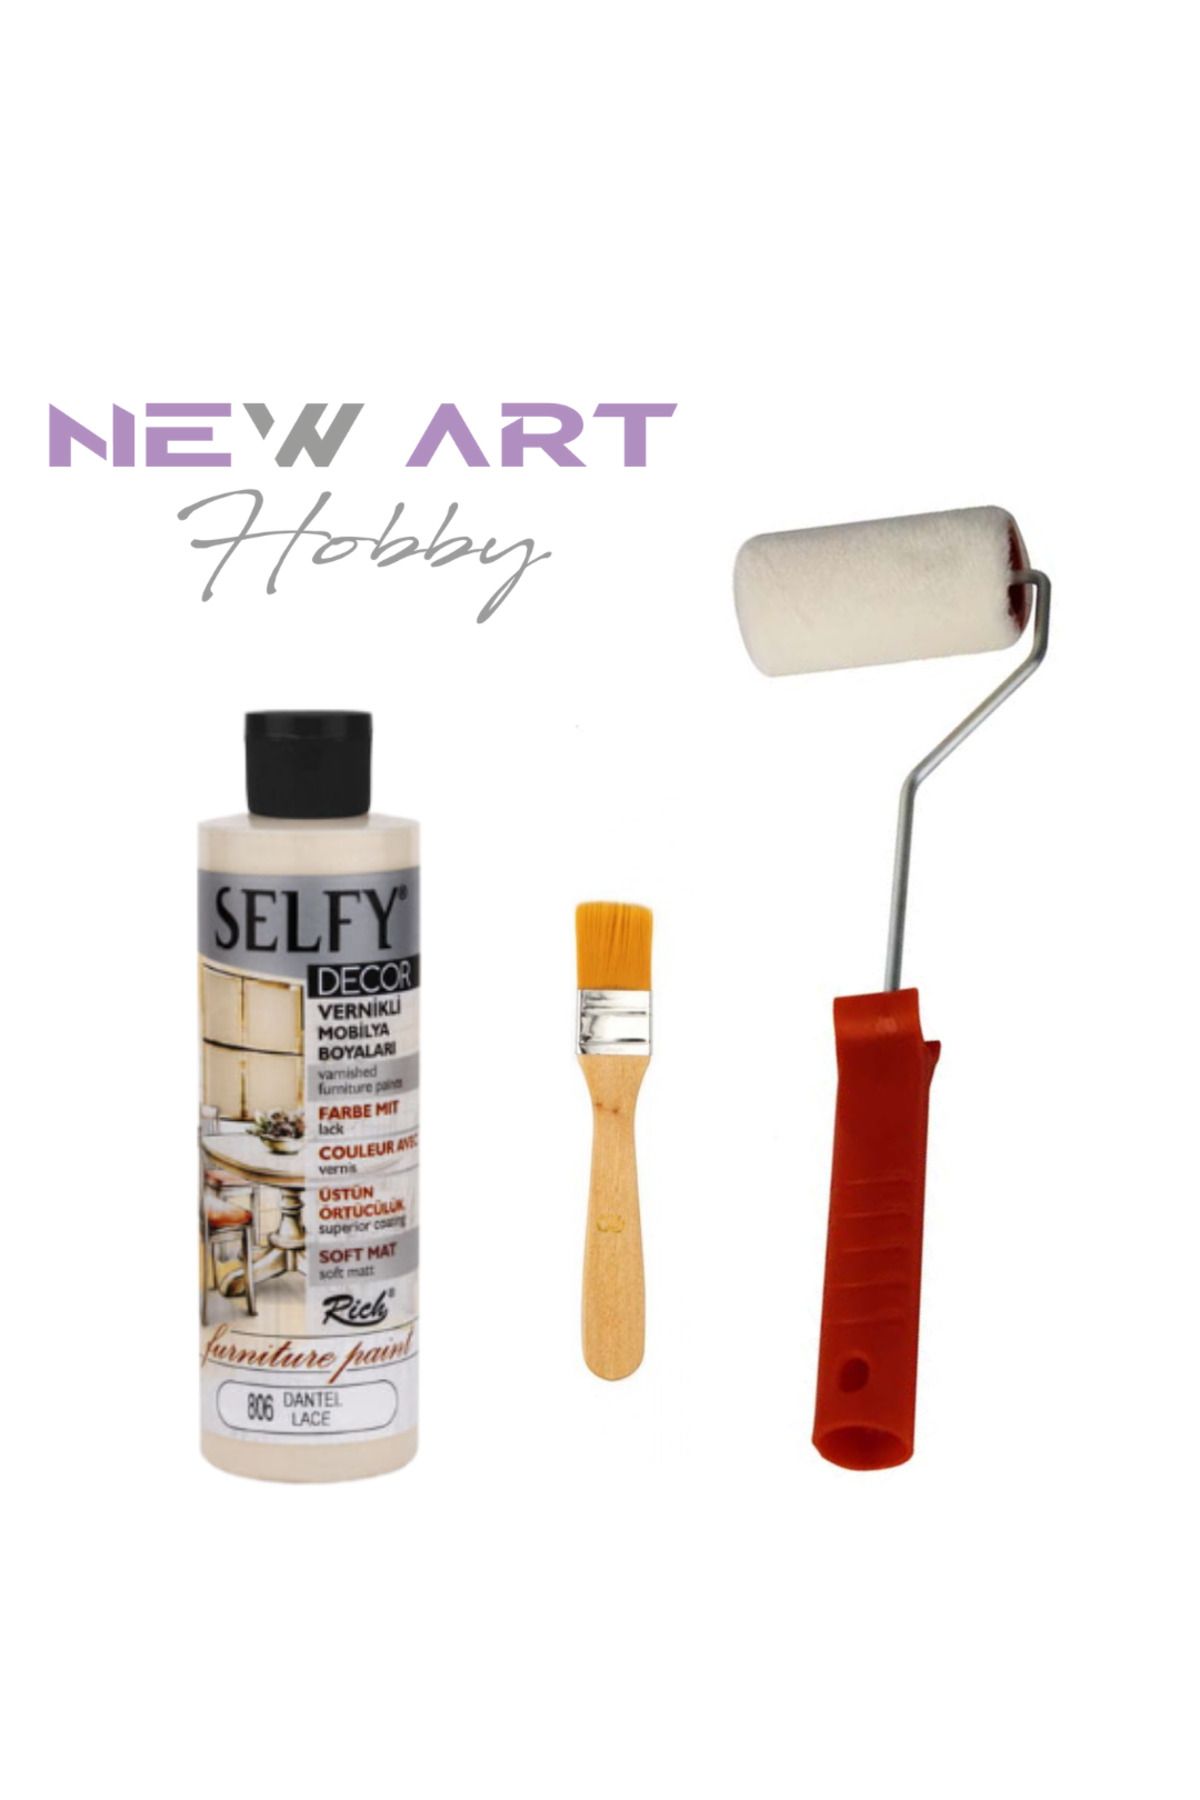 New Art Hobby Selfy Decor Kendinden Vernikli Mobilya Boyama Seti 240 Cc Dantel + Maxi İpek Rulo+ Fırça